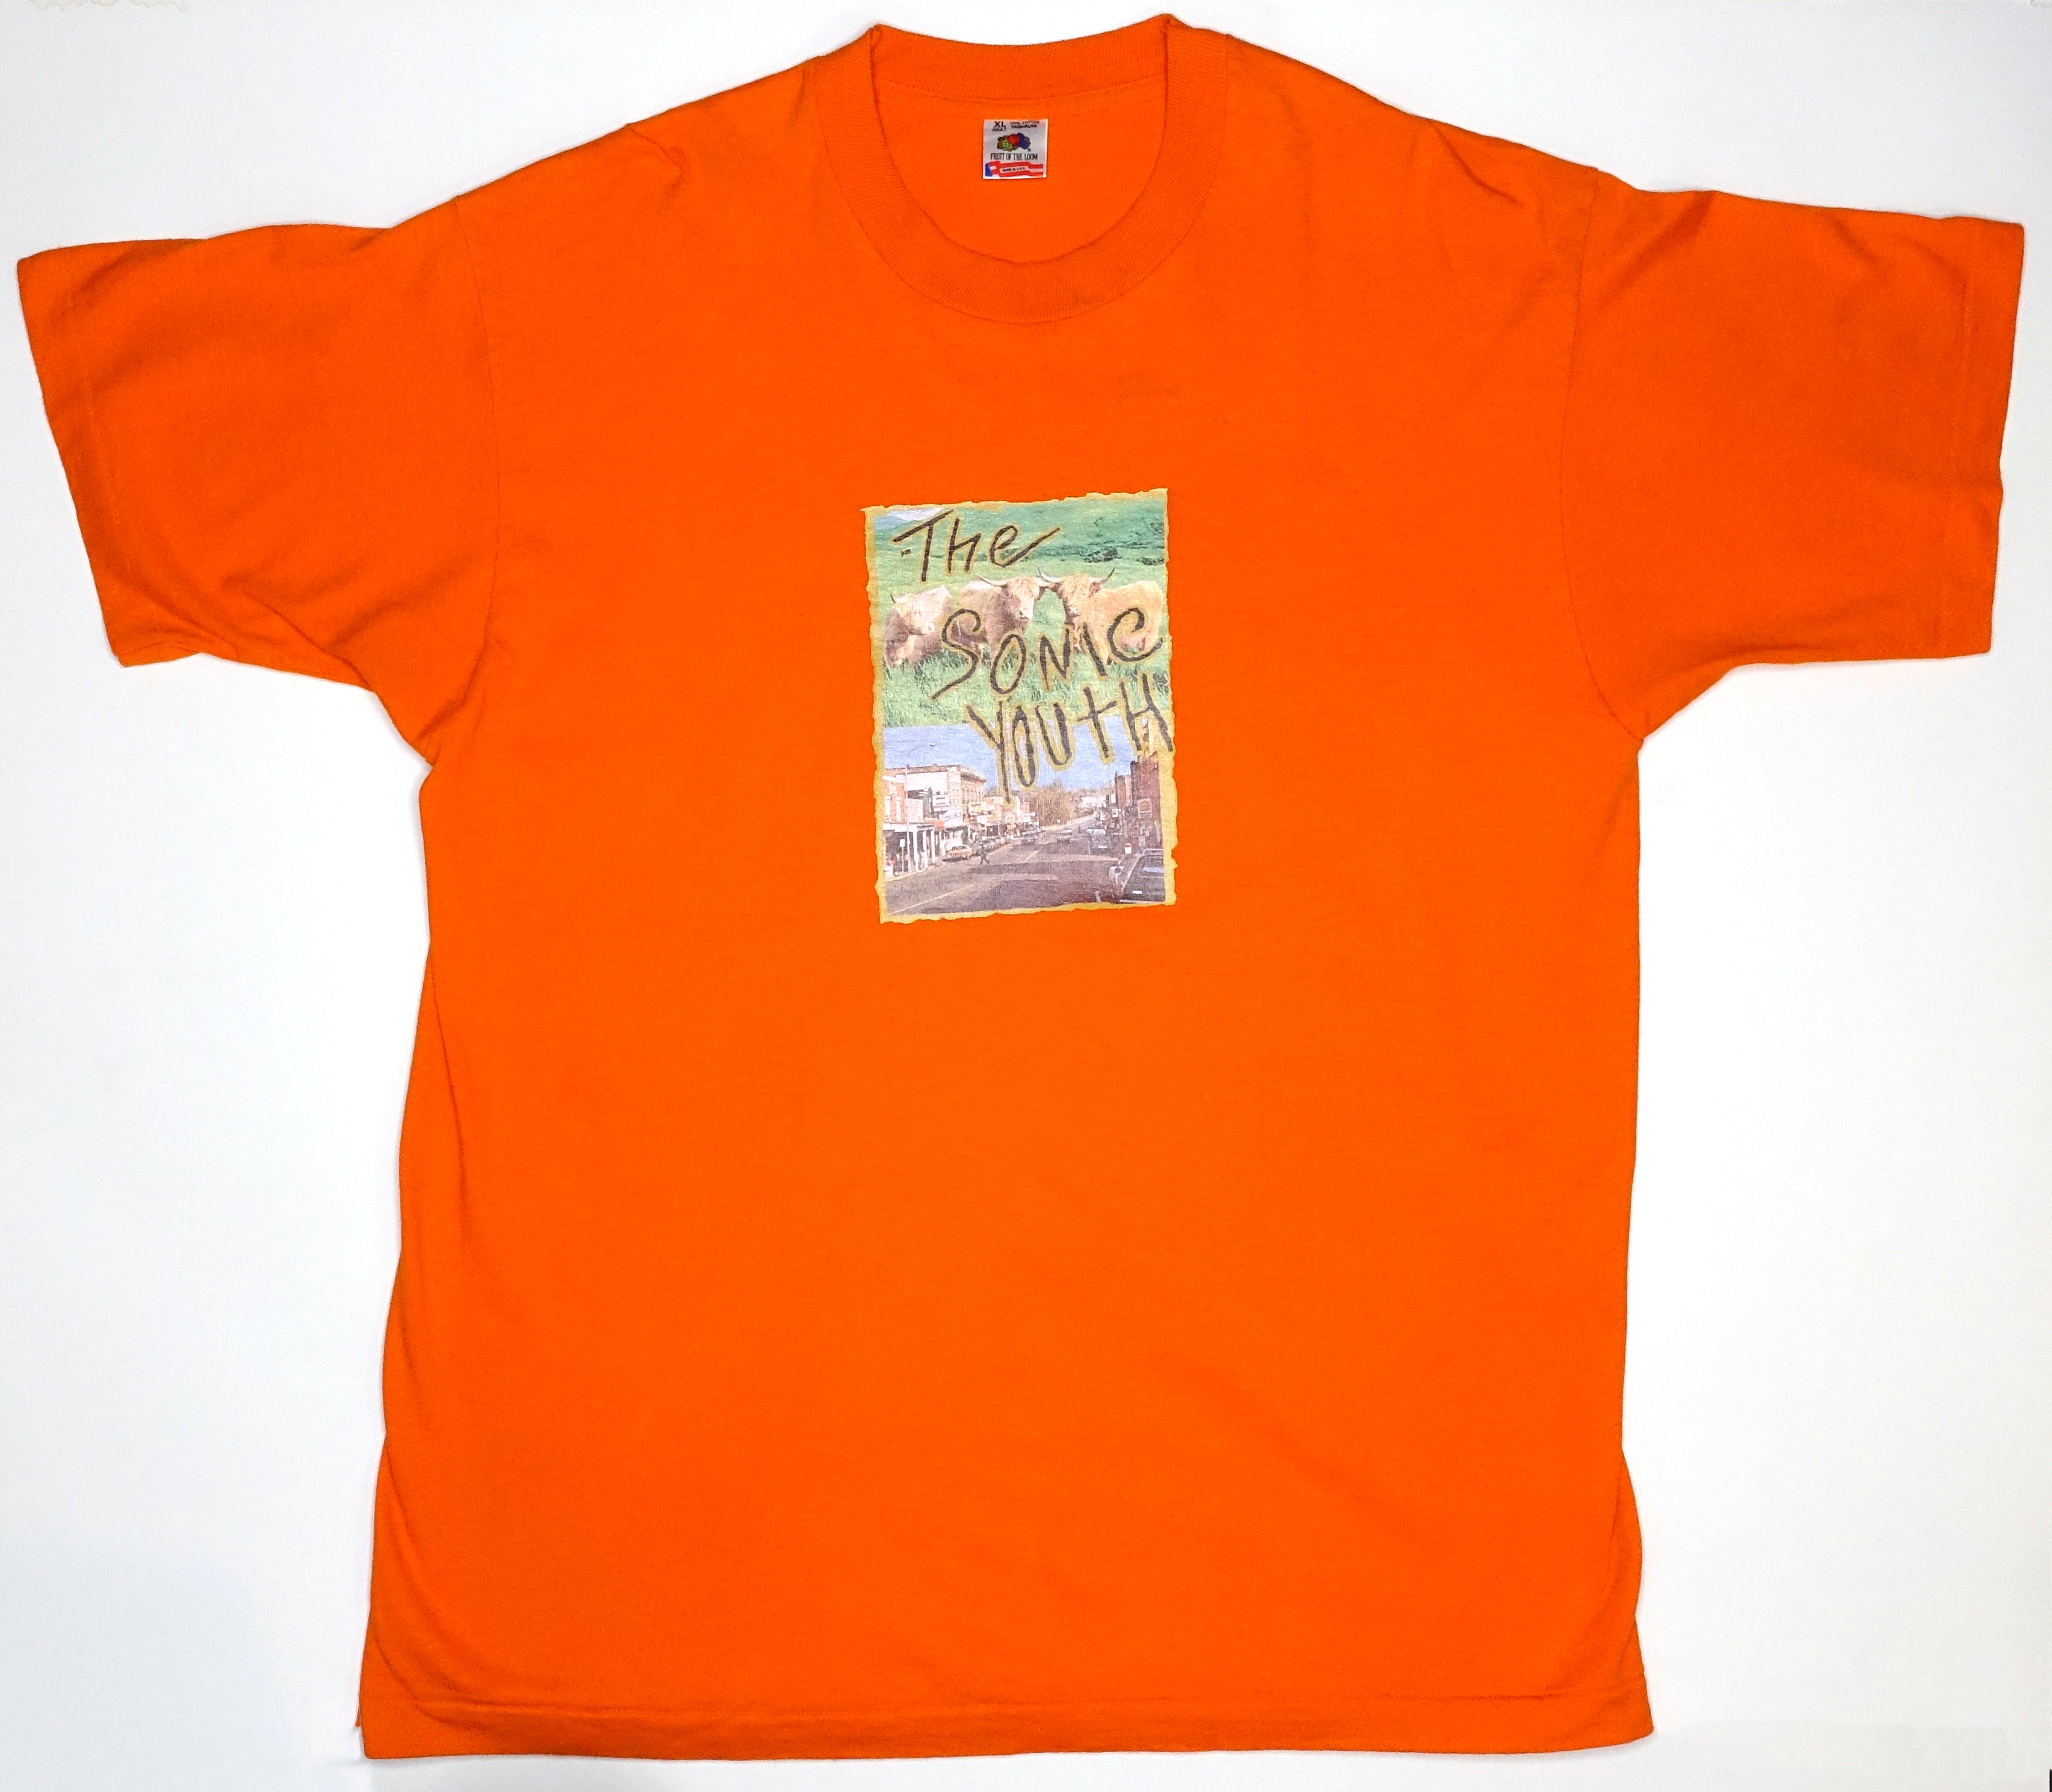 Sonic Youth - Sister Orange 1987 Tour Shirt Size XL